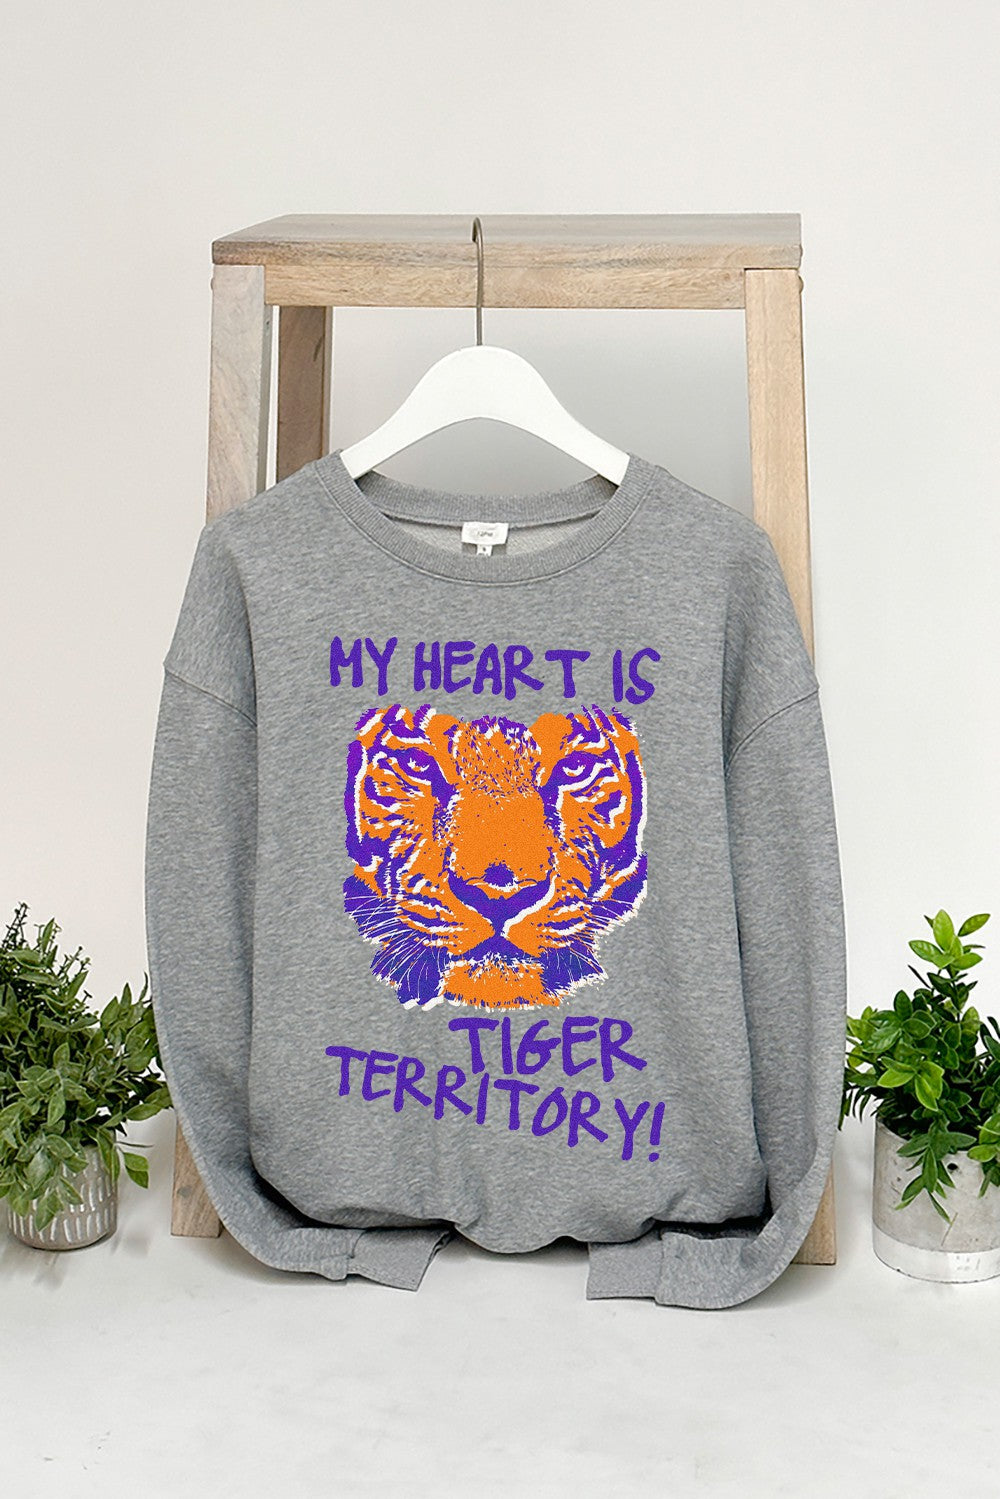 Clemson Tiger Territory Sweatshirt